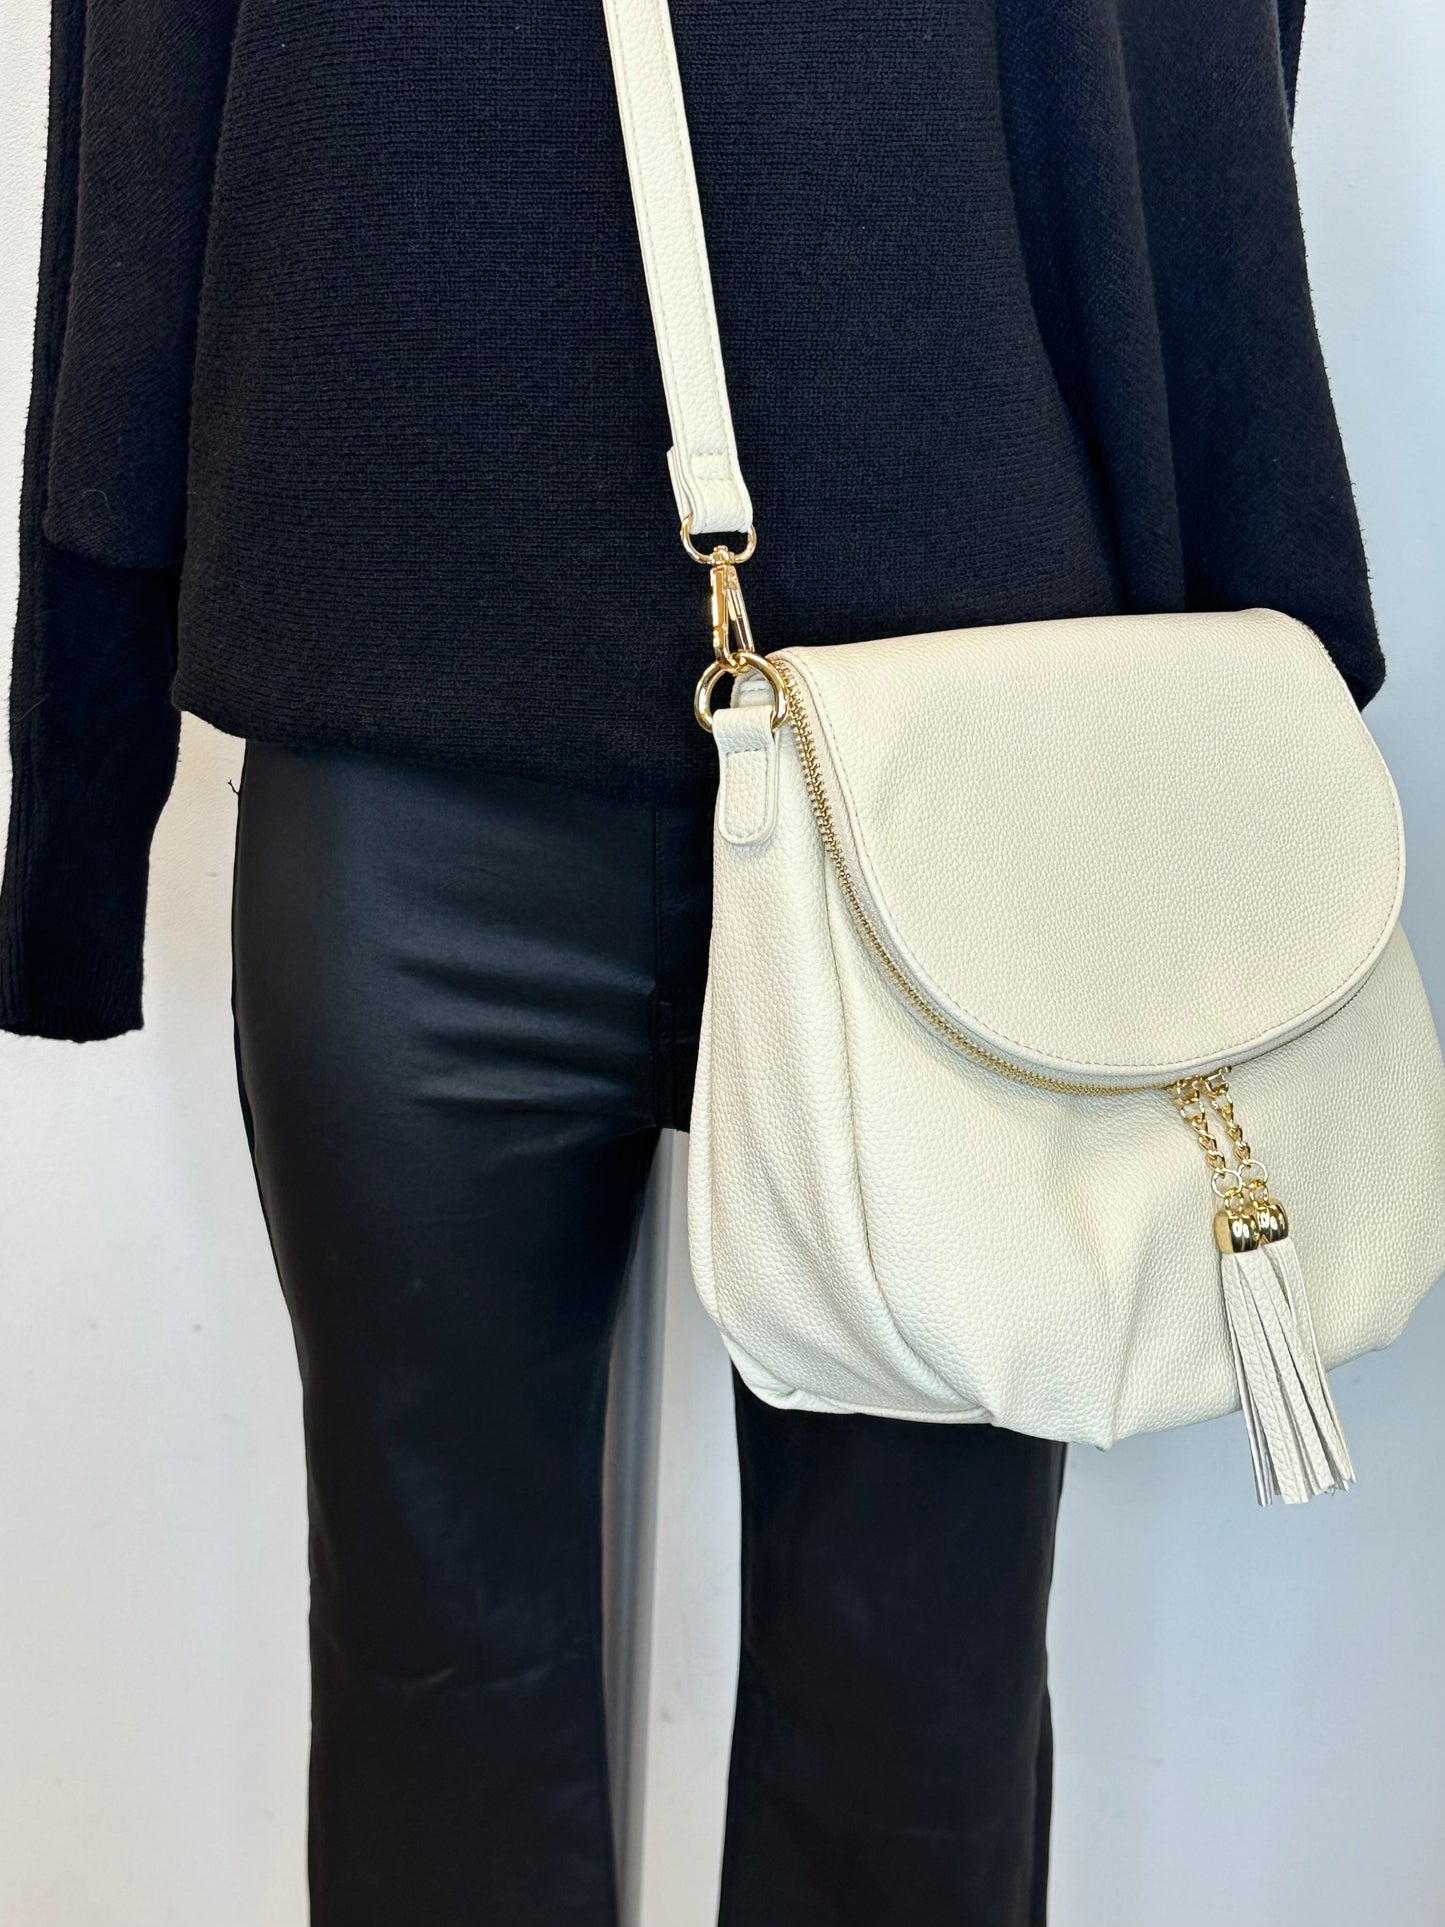 Soft satchel tassel bag - Cream colour